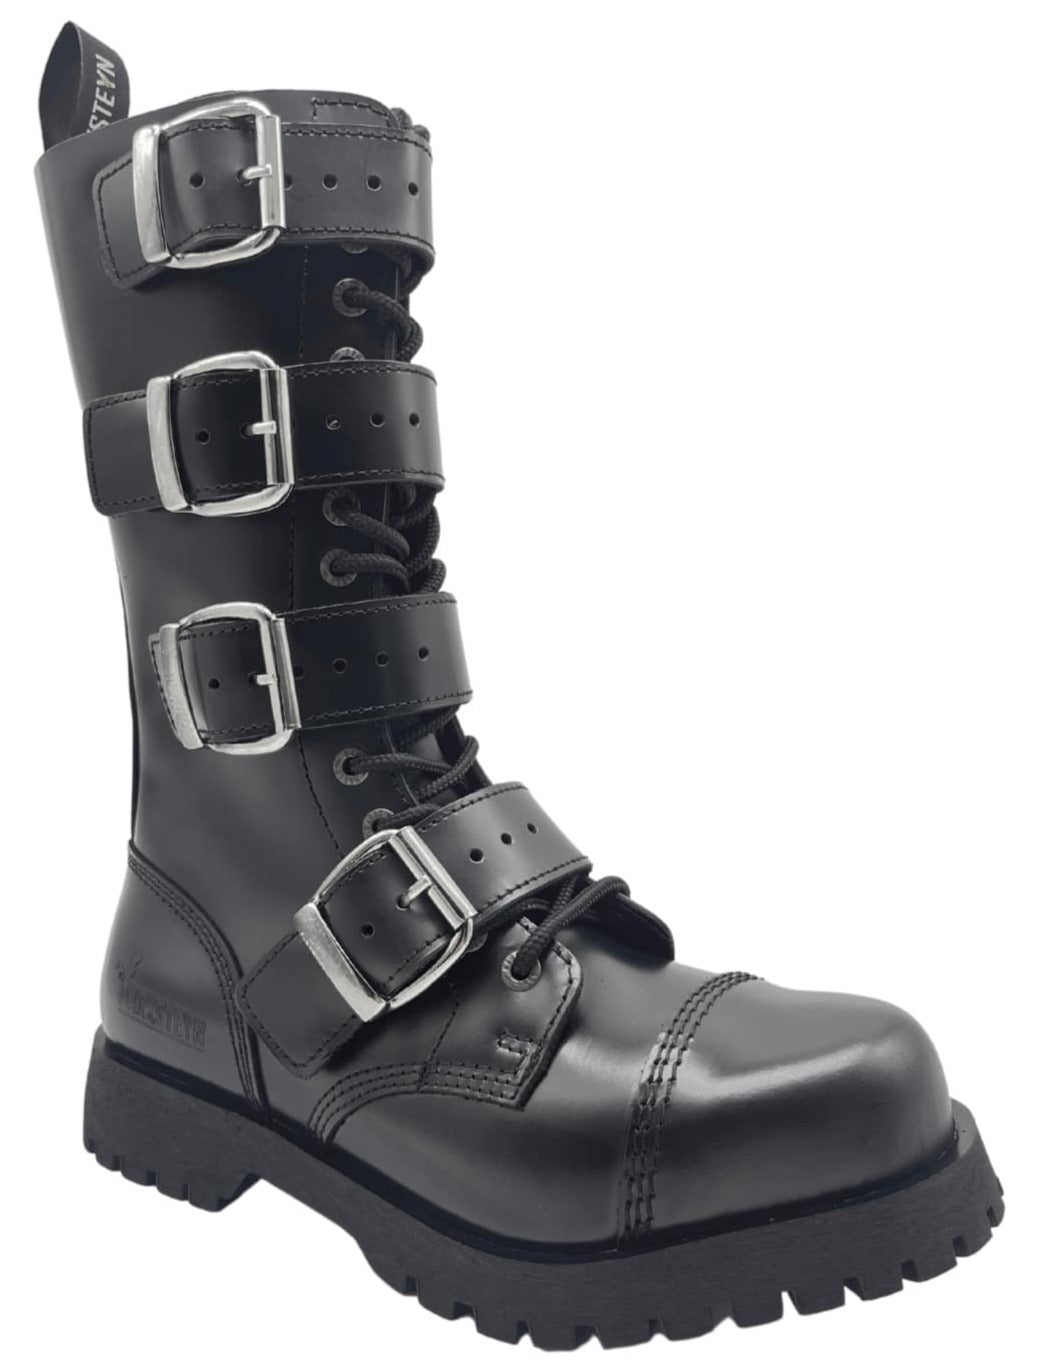 Darksteyn Shoes 14 Eye 4 Buckle Ranger Premium Boots Black